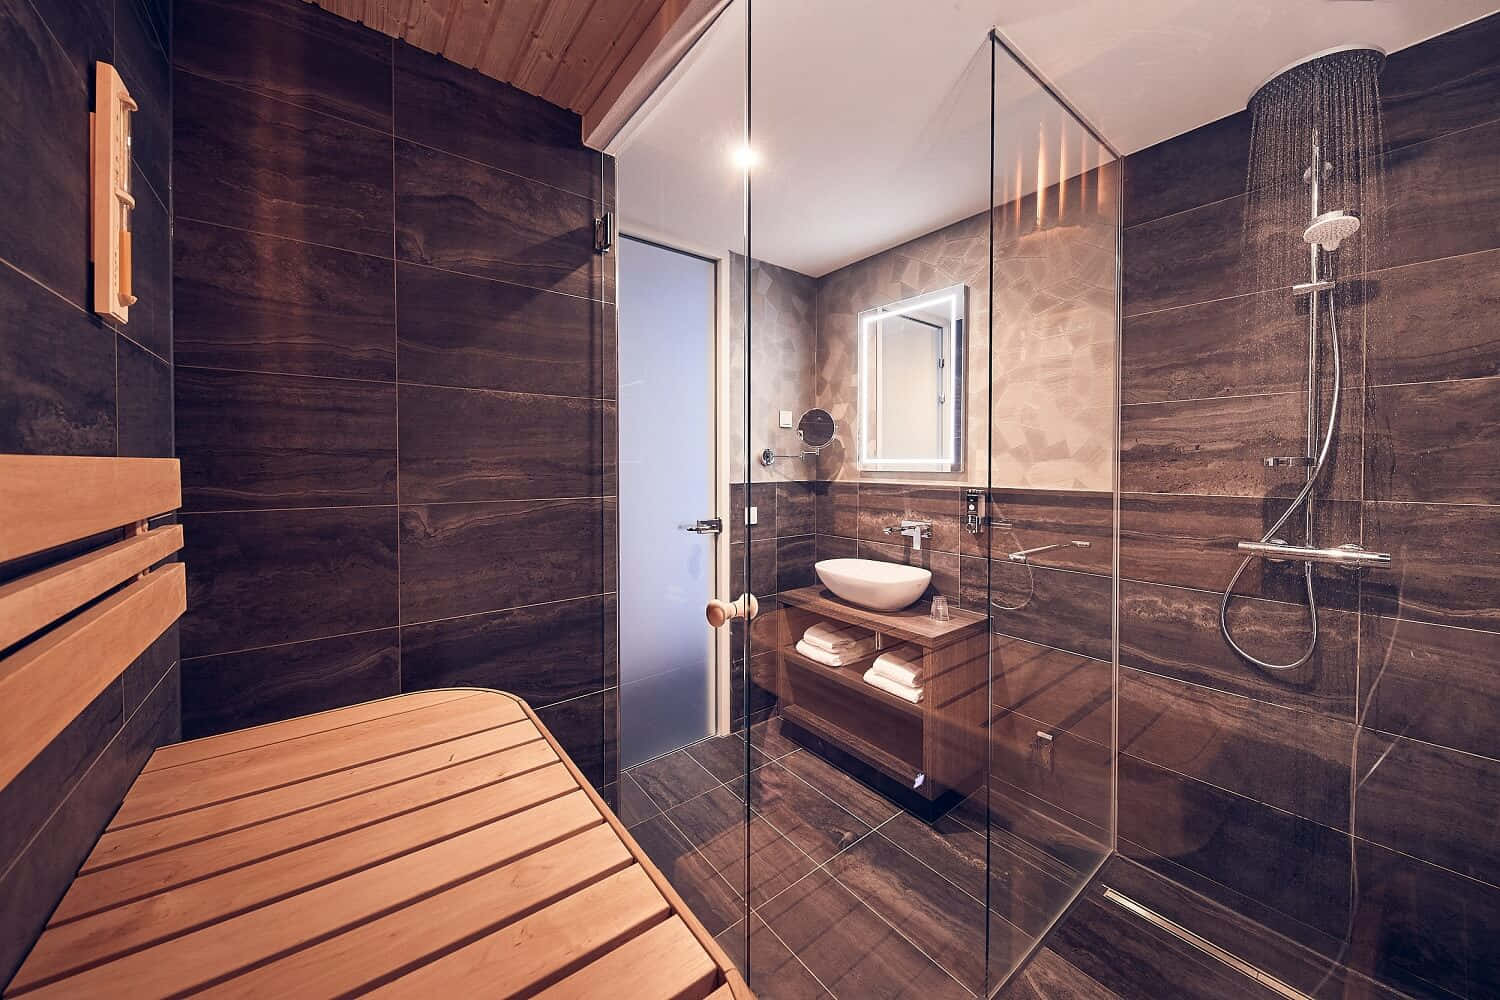 Caption: "Luxurious sauna experience at the Inntel Hotel Zaandam" Wallpaper